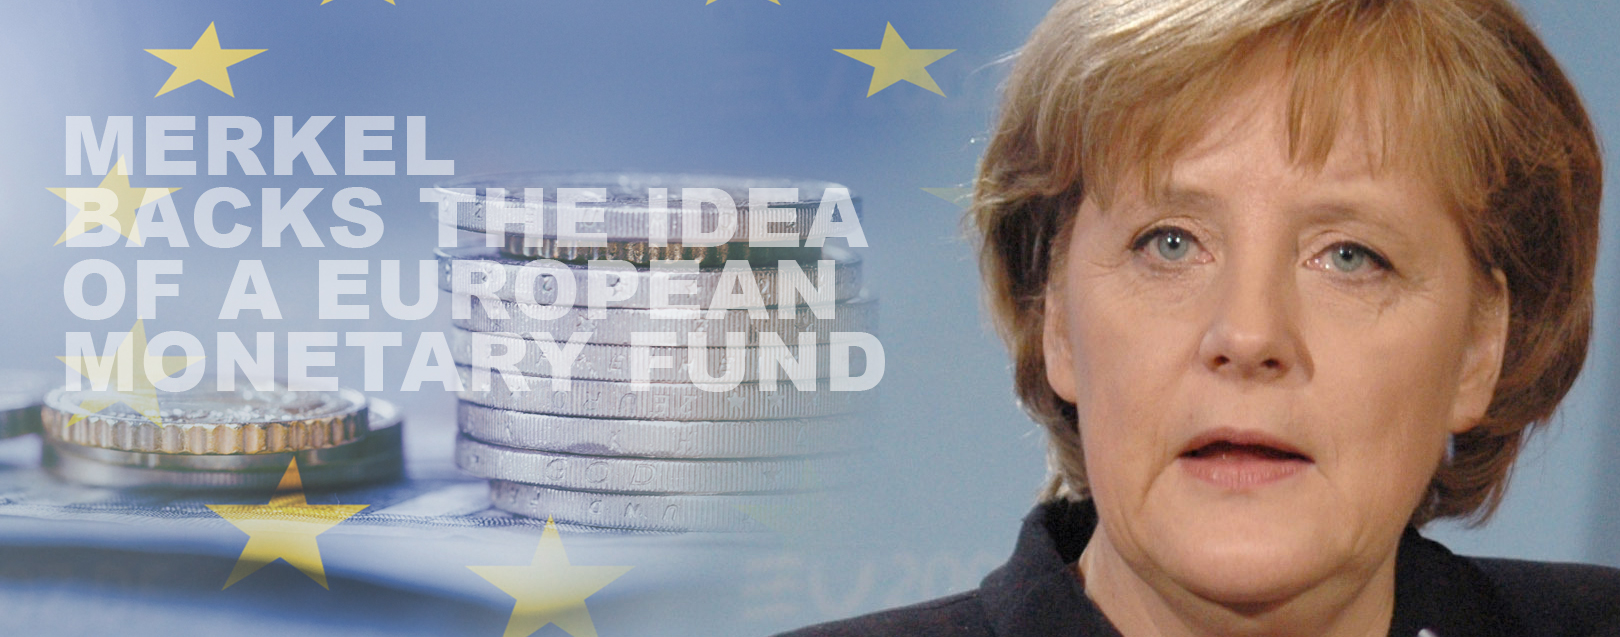 Merkel backs the idea of a European Monetary Fund